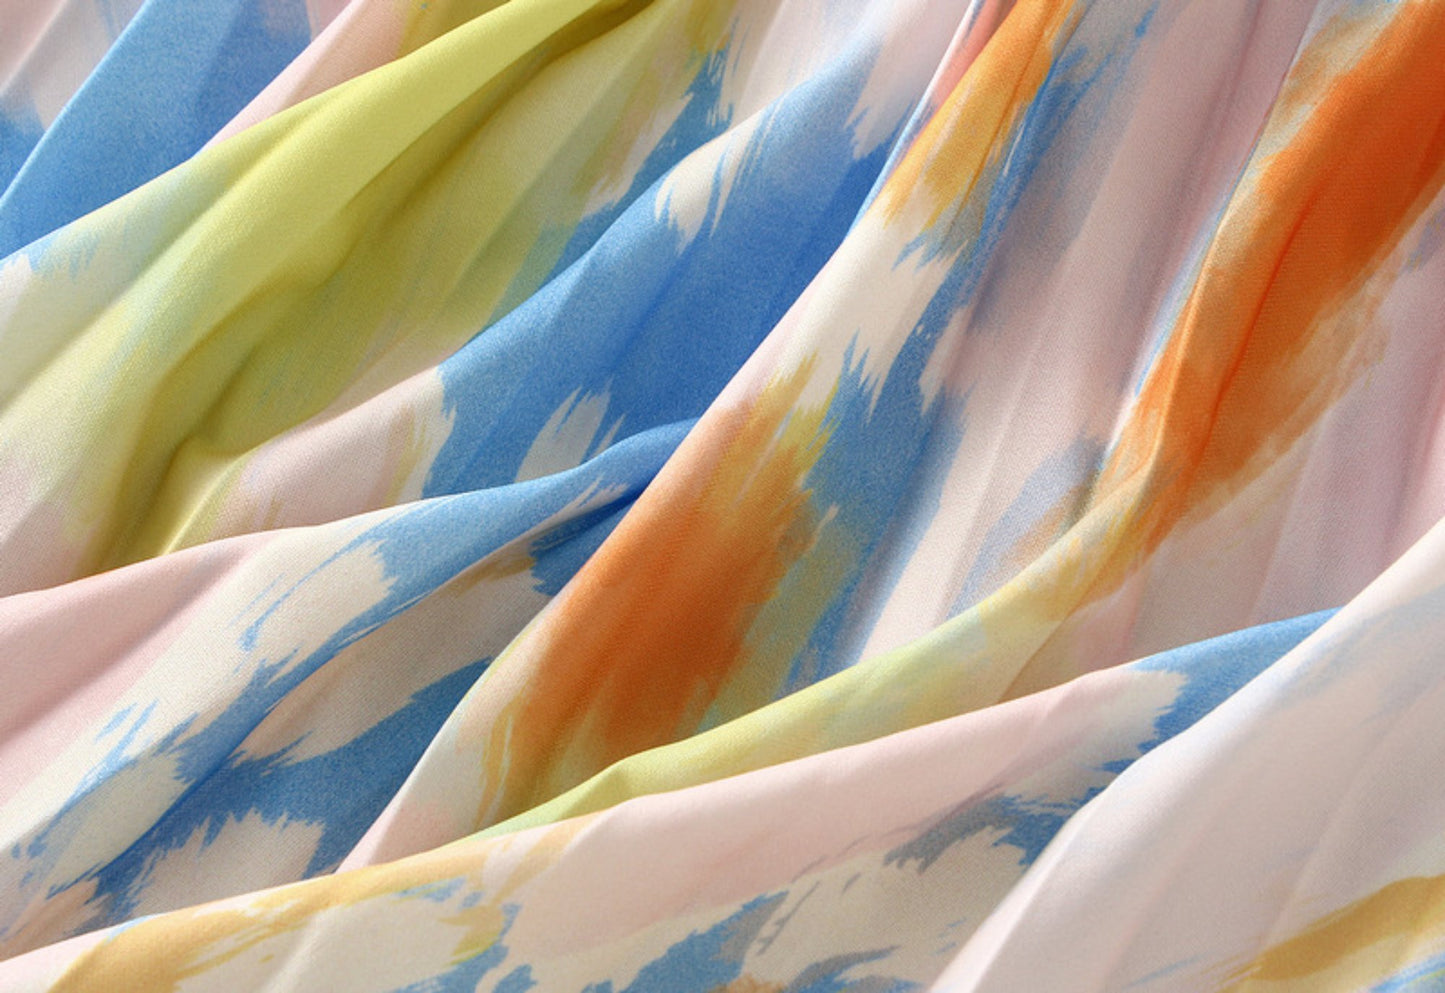 Retro Colorful Print A-line Pleated Midi Skirt